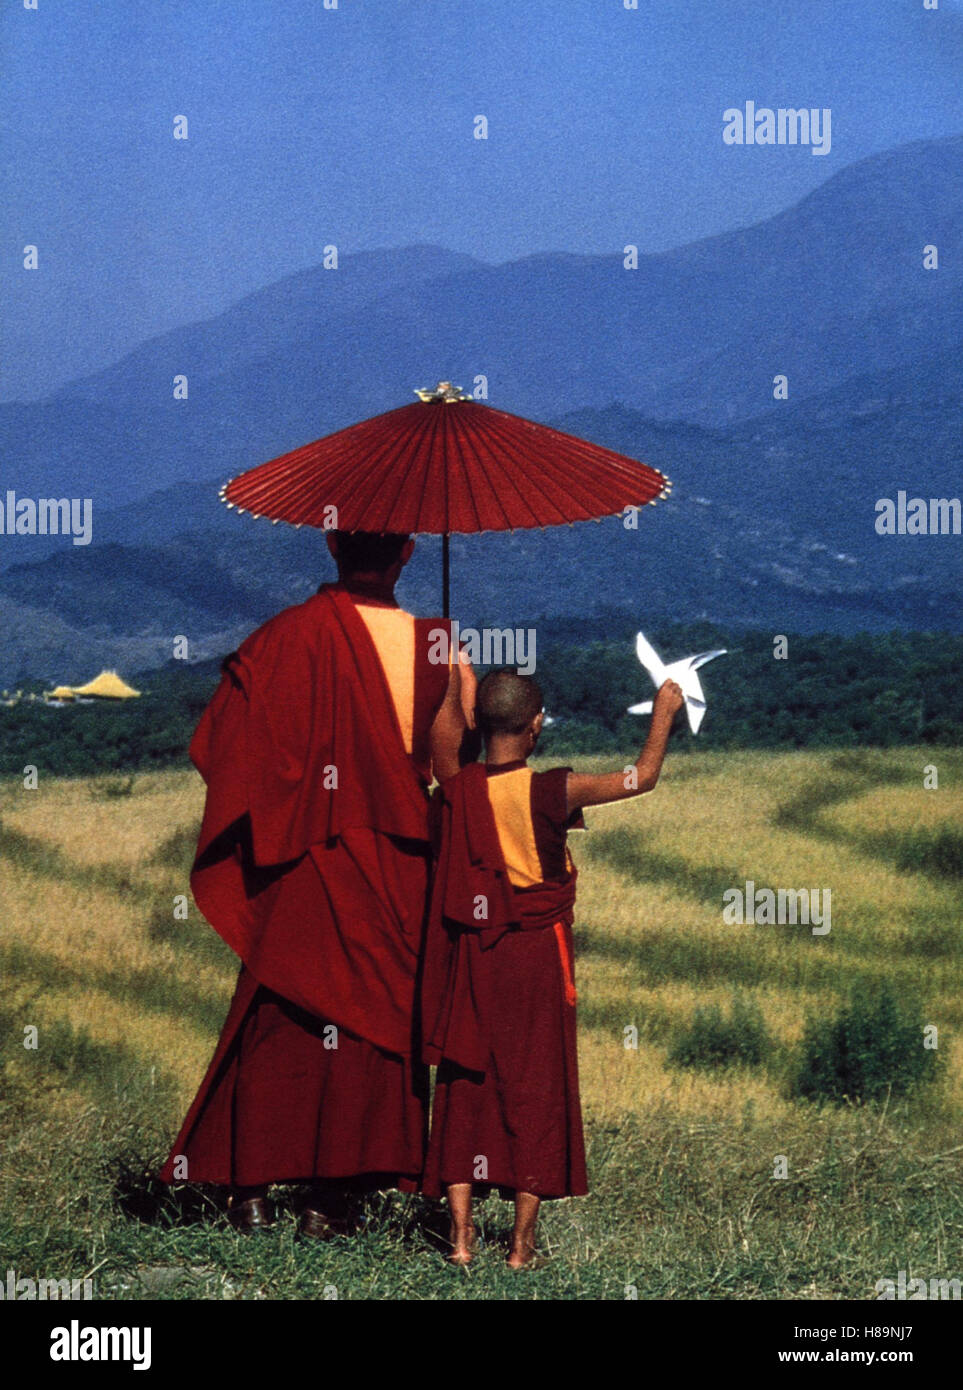 Spiel der Götter, (COPA) / PHÖRPA IND 1999, Regie: Khyentse Norbu, Szene, Moncho, Sonnenschirm Stichwort: Foto de stock